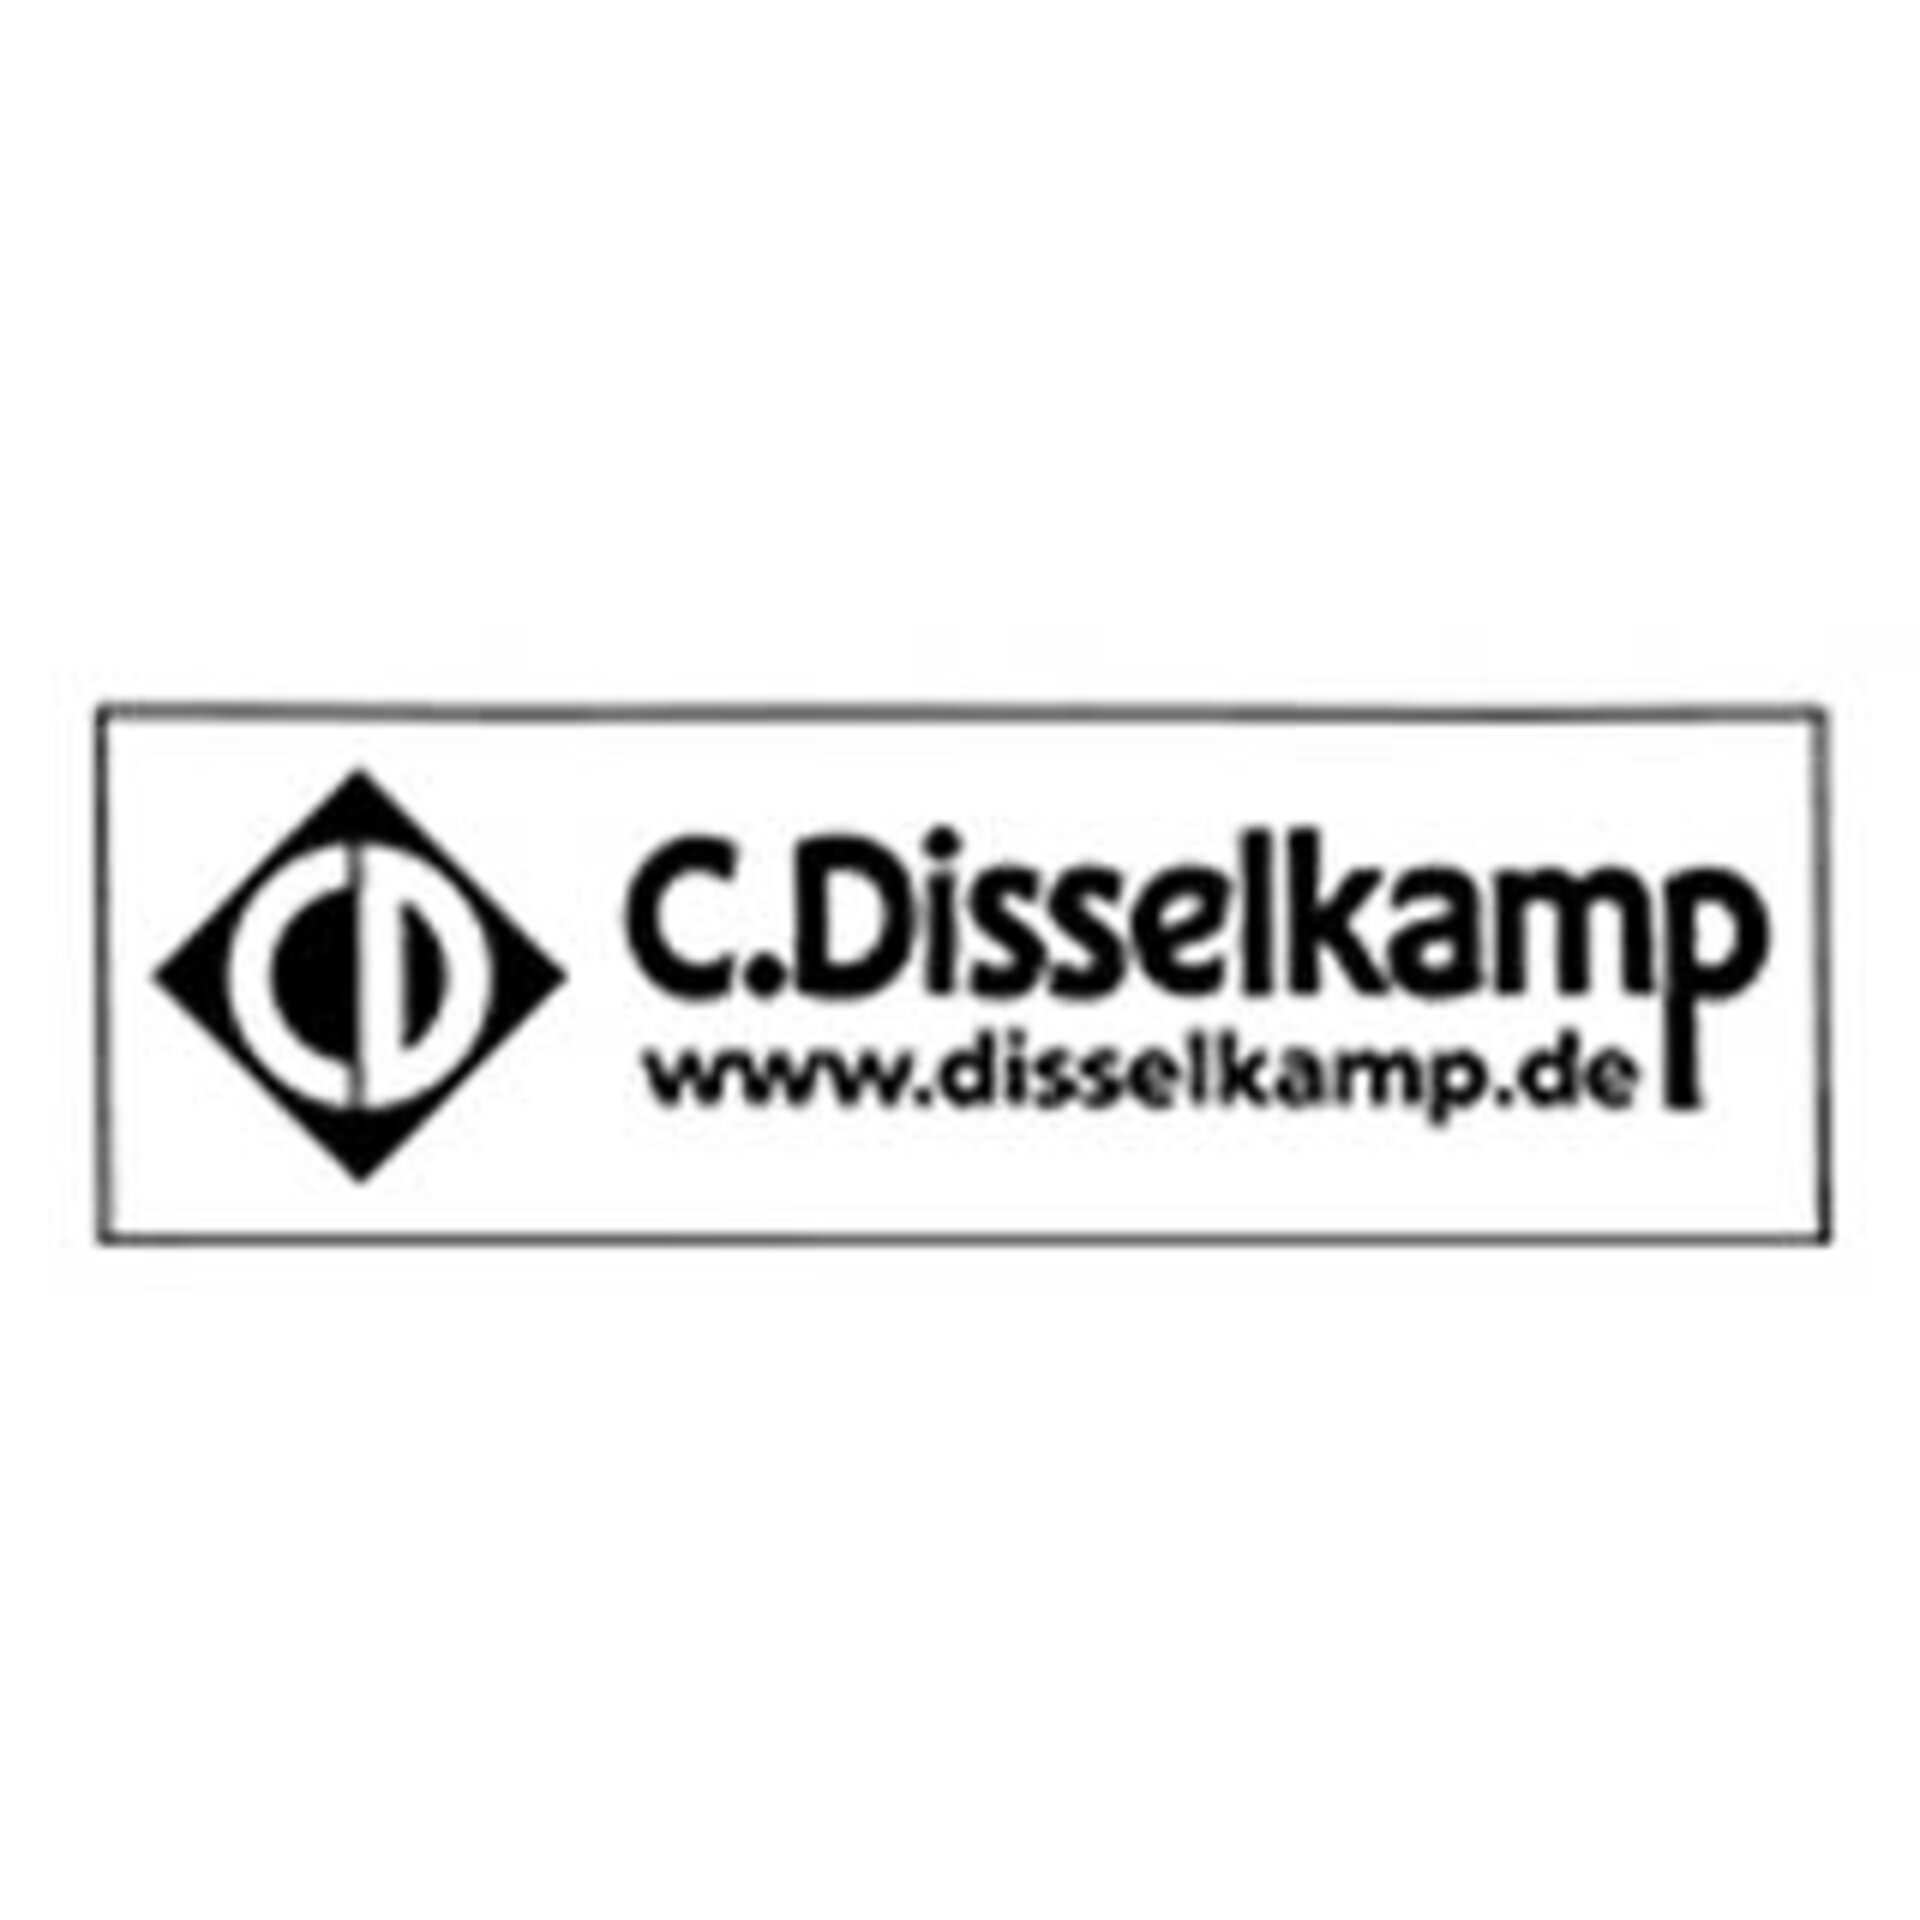 C.Disselkamp Logo